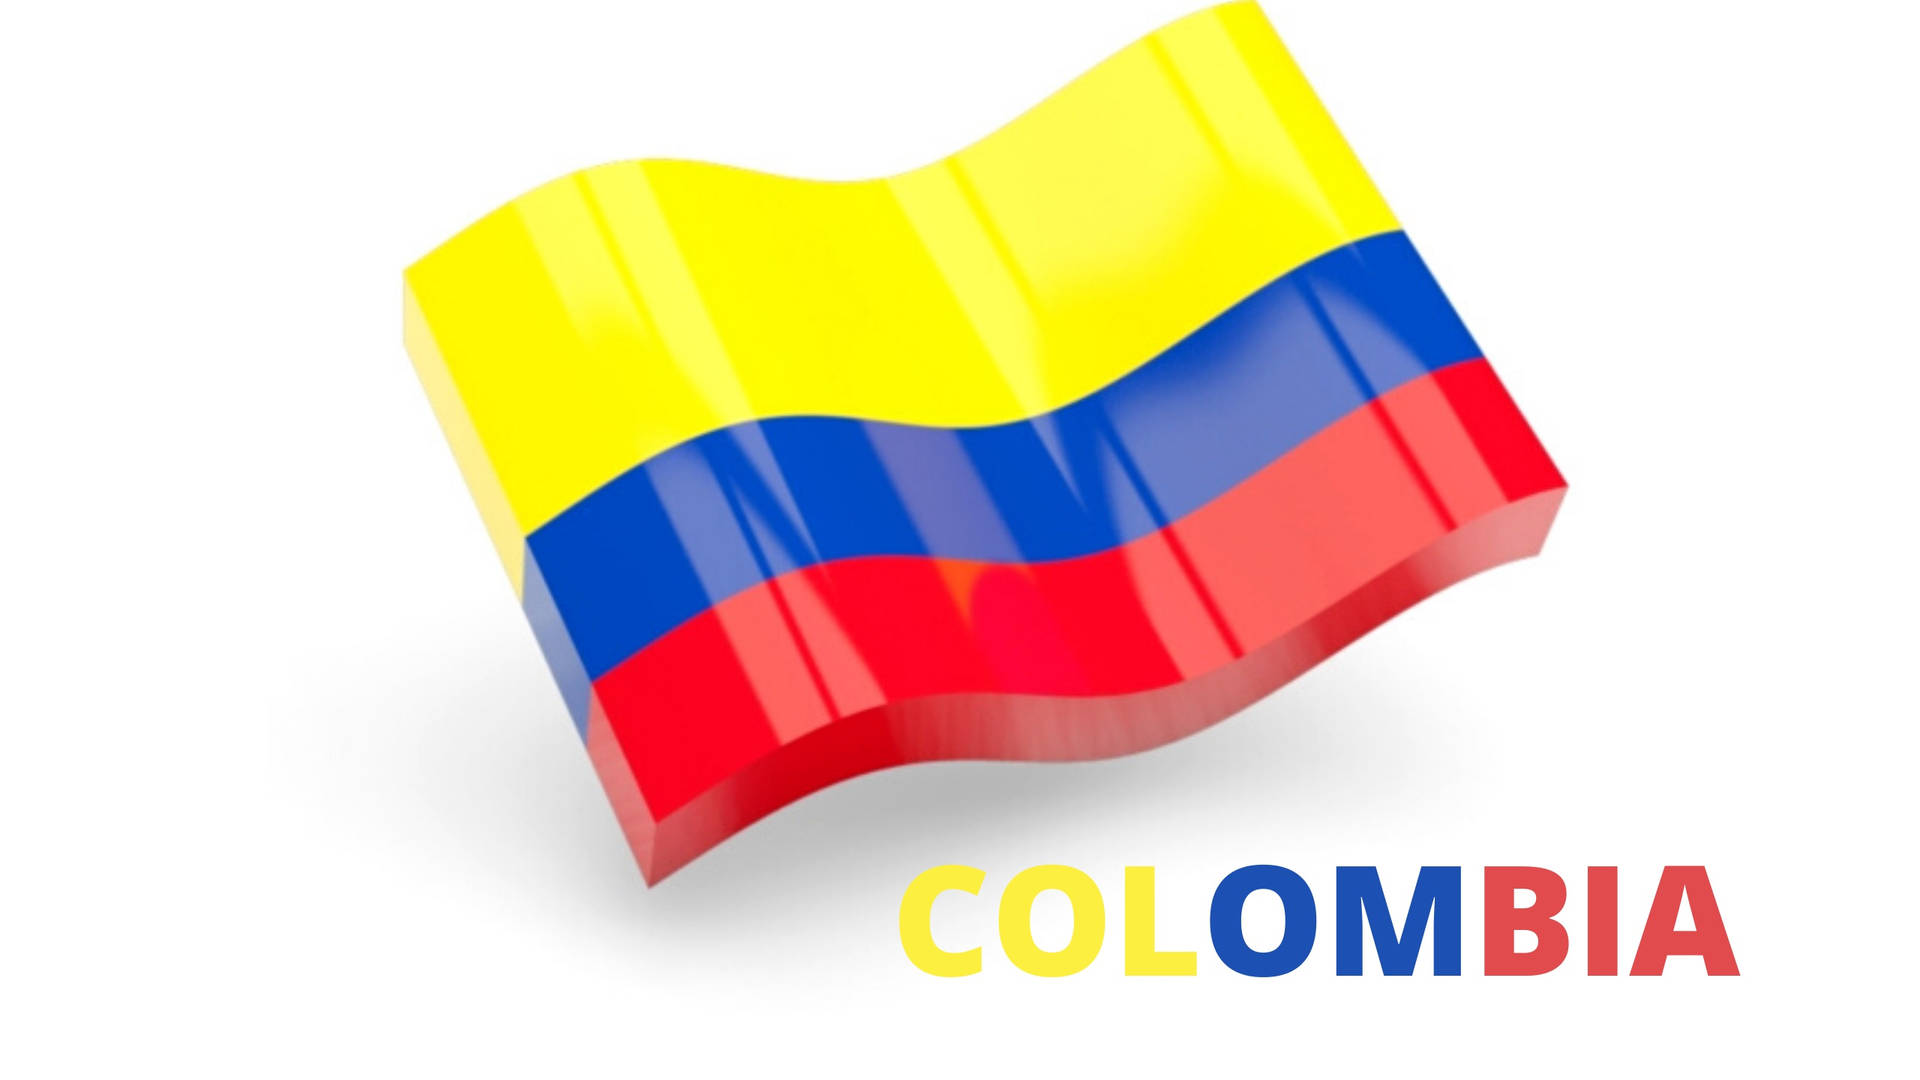 Coole3d-kunst Mit Der Kolumbianischen Flagge Wallpaper